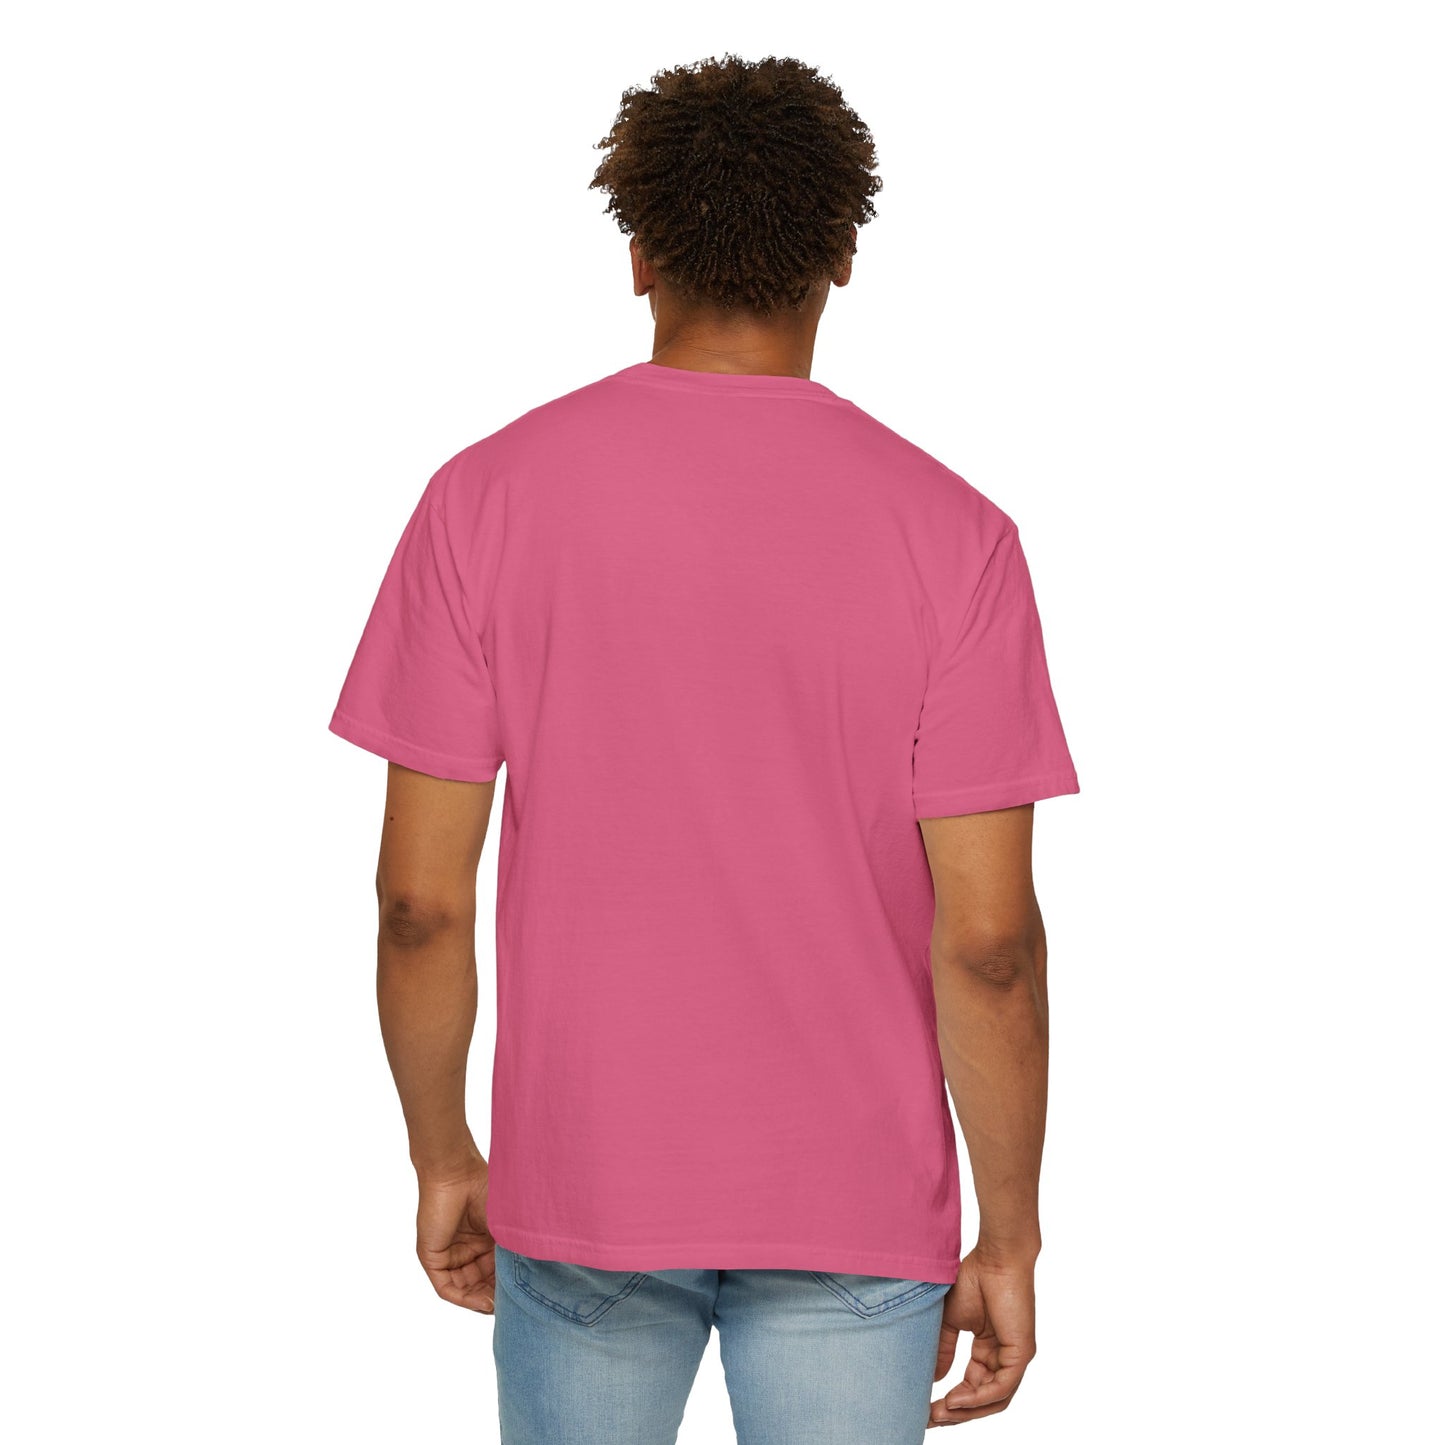 Unisex Comfort Colors T-shirt | Sea of Treachery